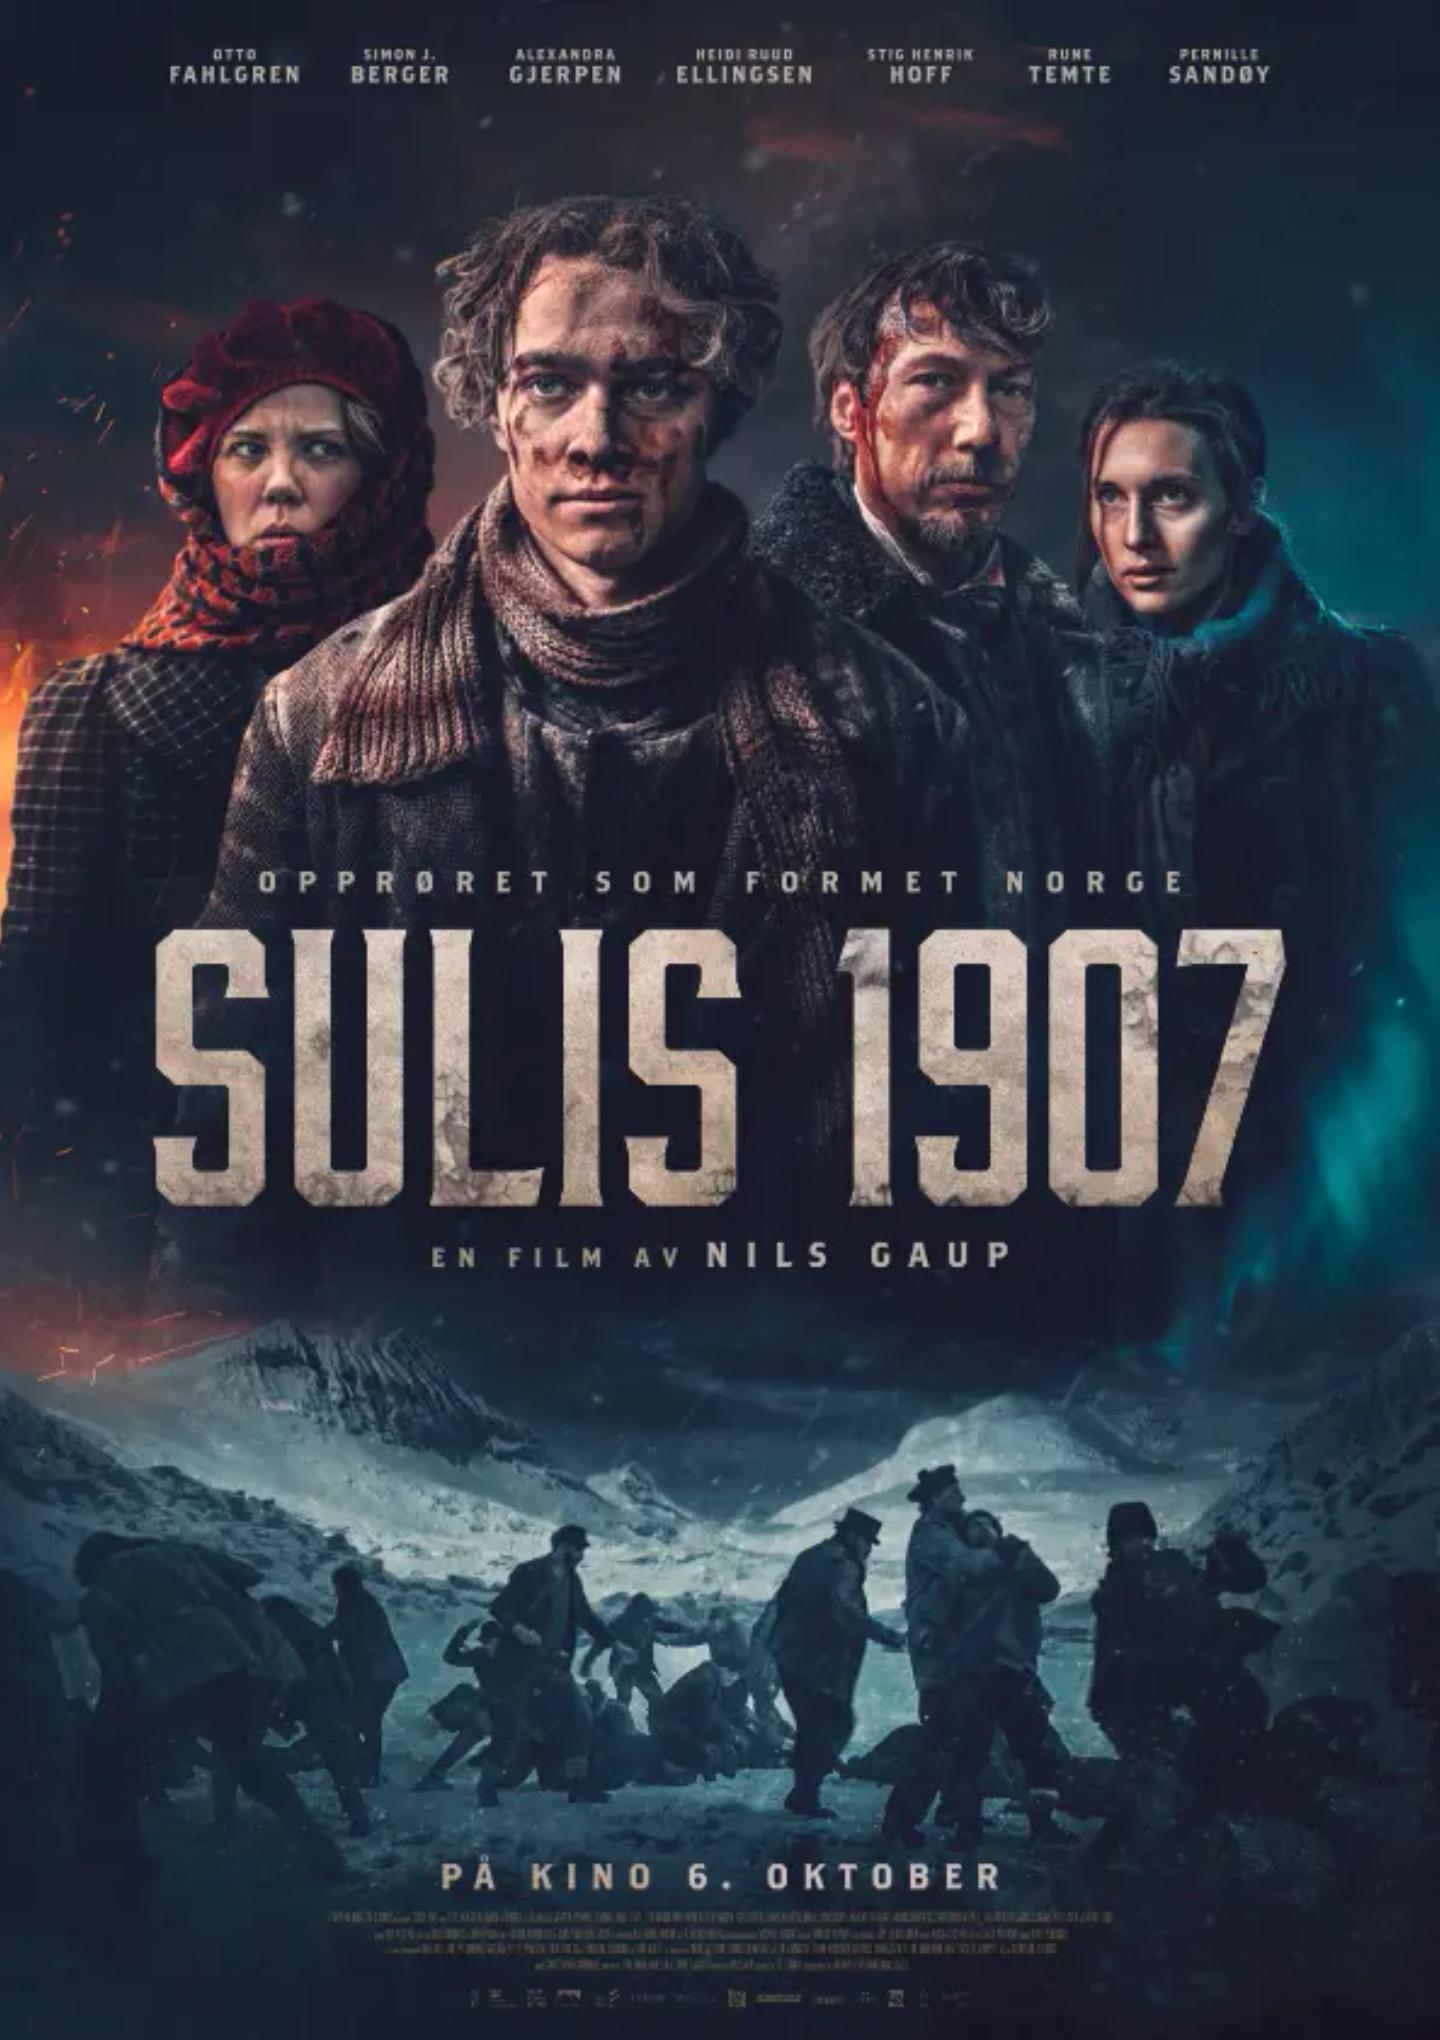 Plakat for 'Sulis 1907'